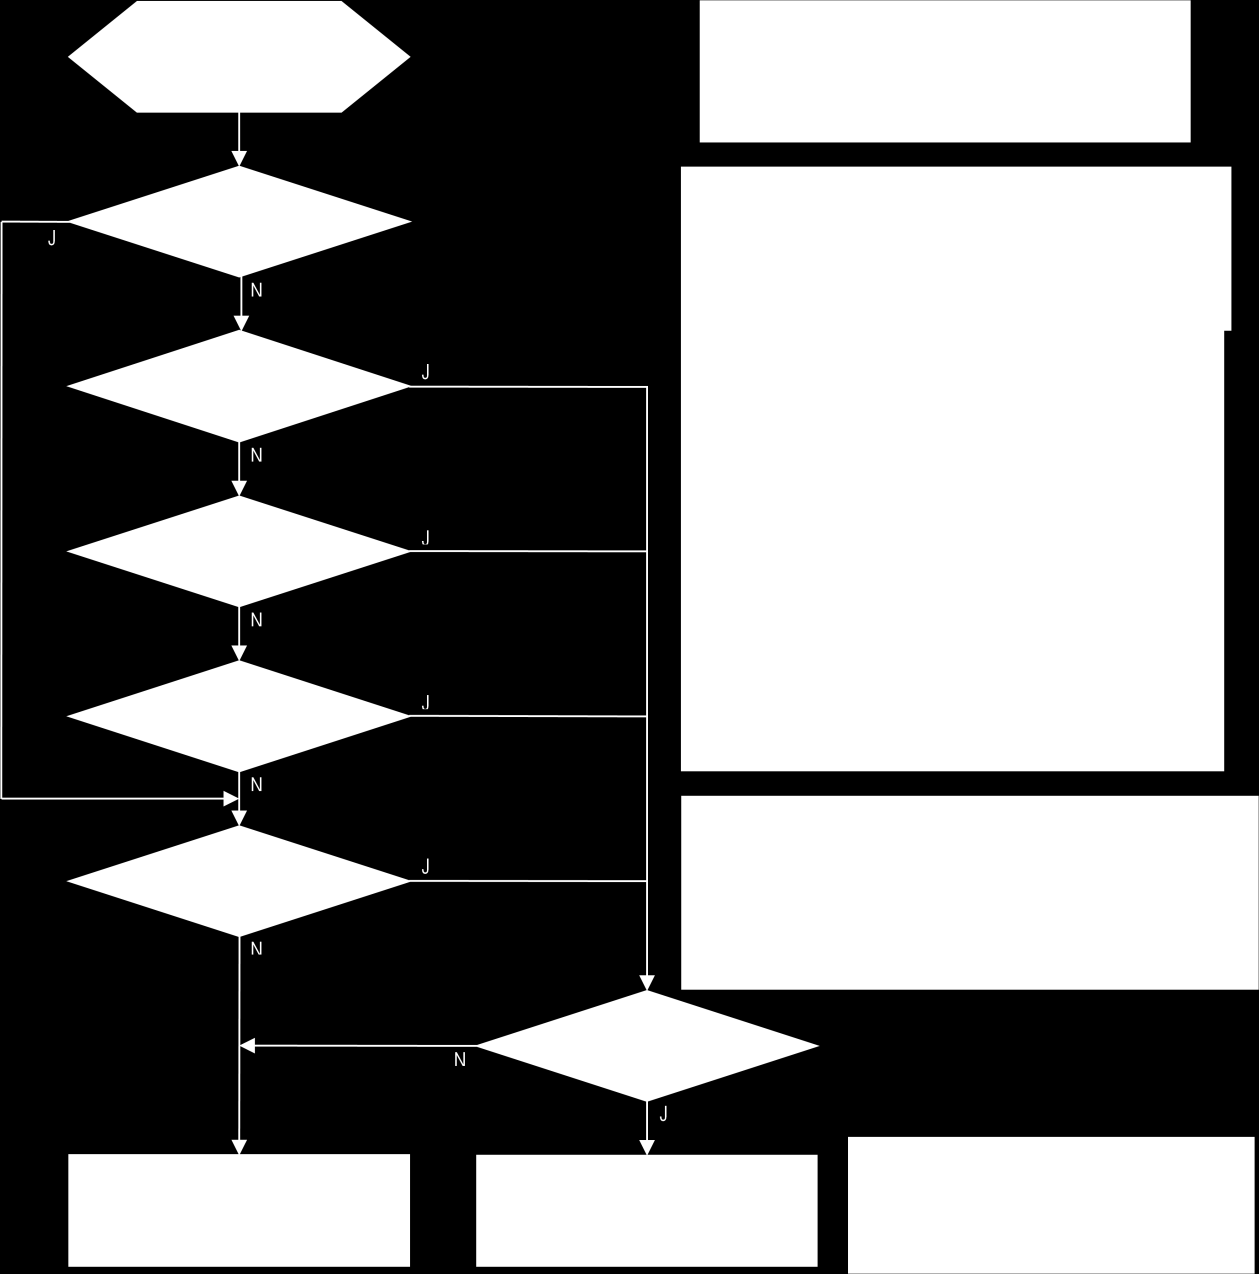 7 Bijlage 3. Stroomdiagram.